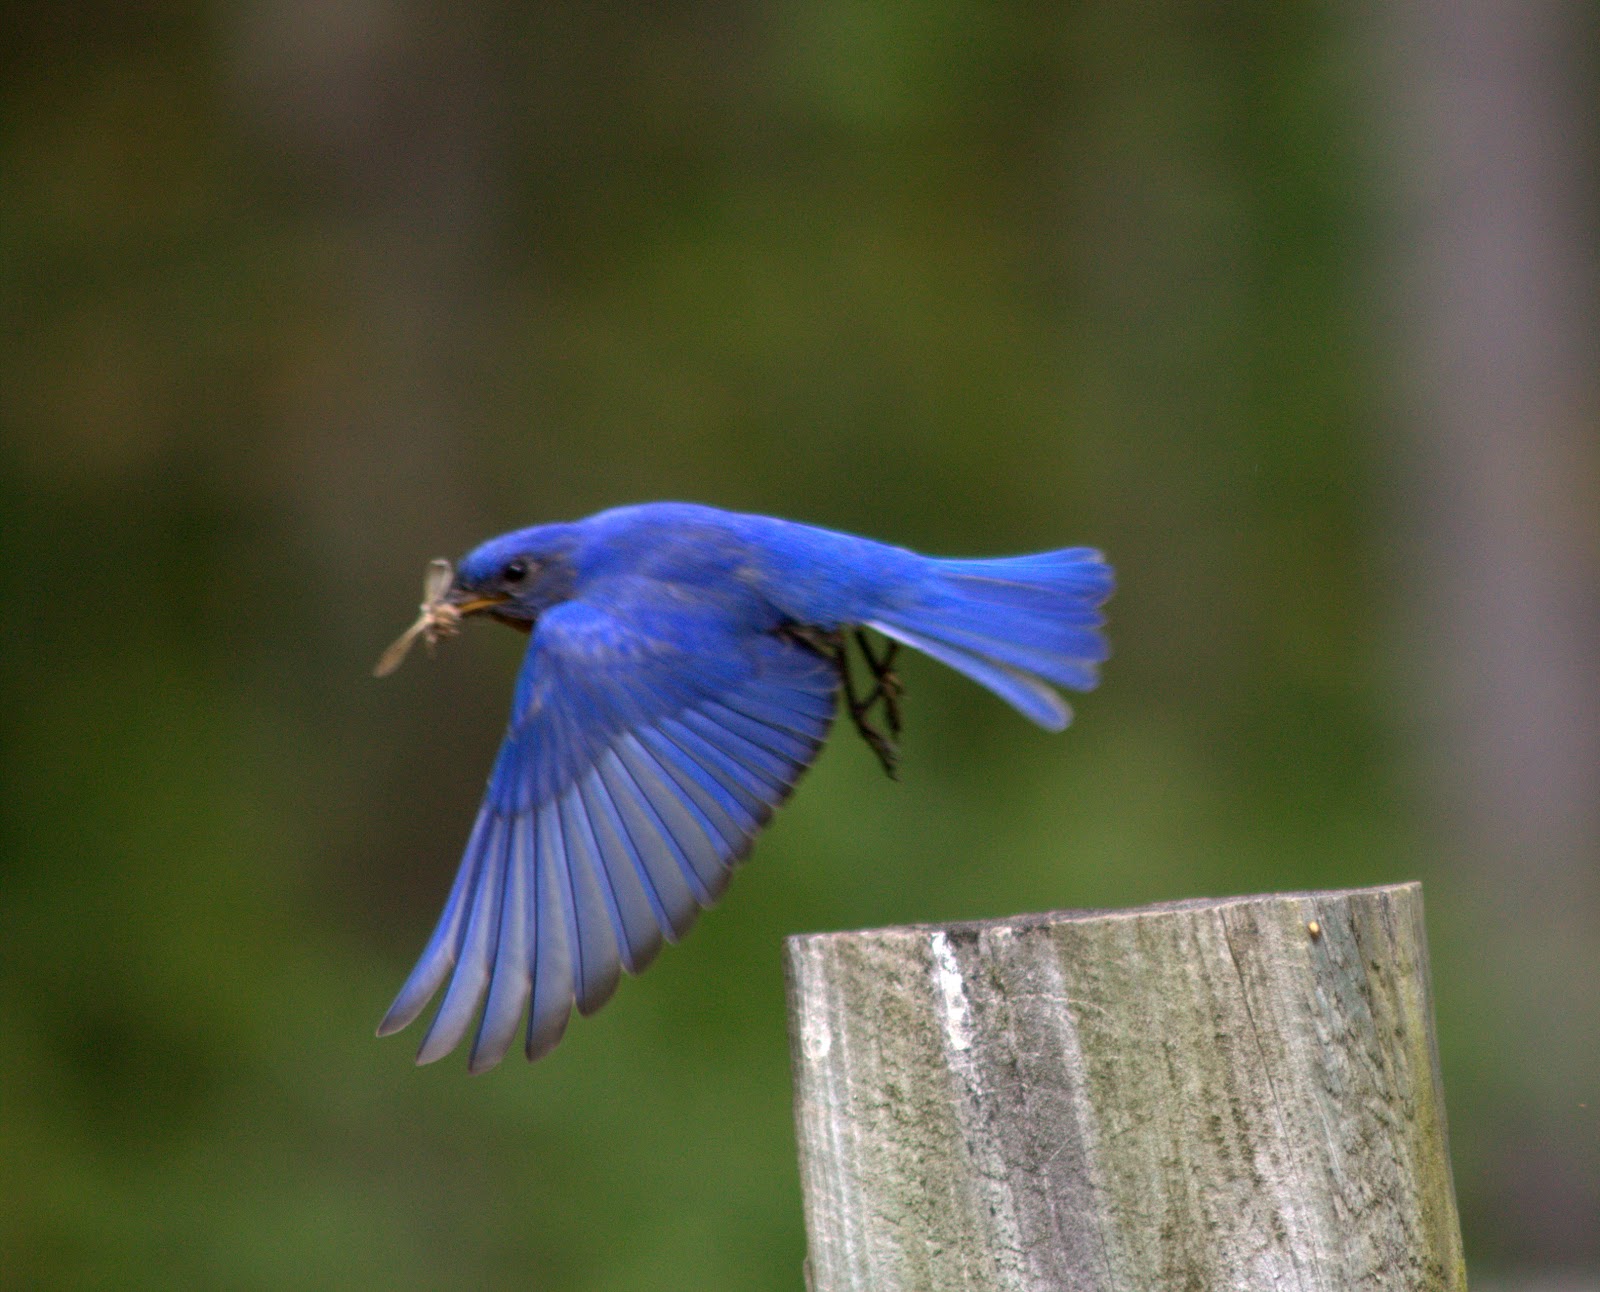 Birding Jablonski Style!: A Bluebird Day Today!